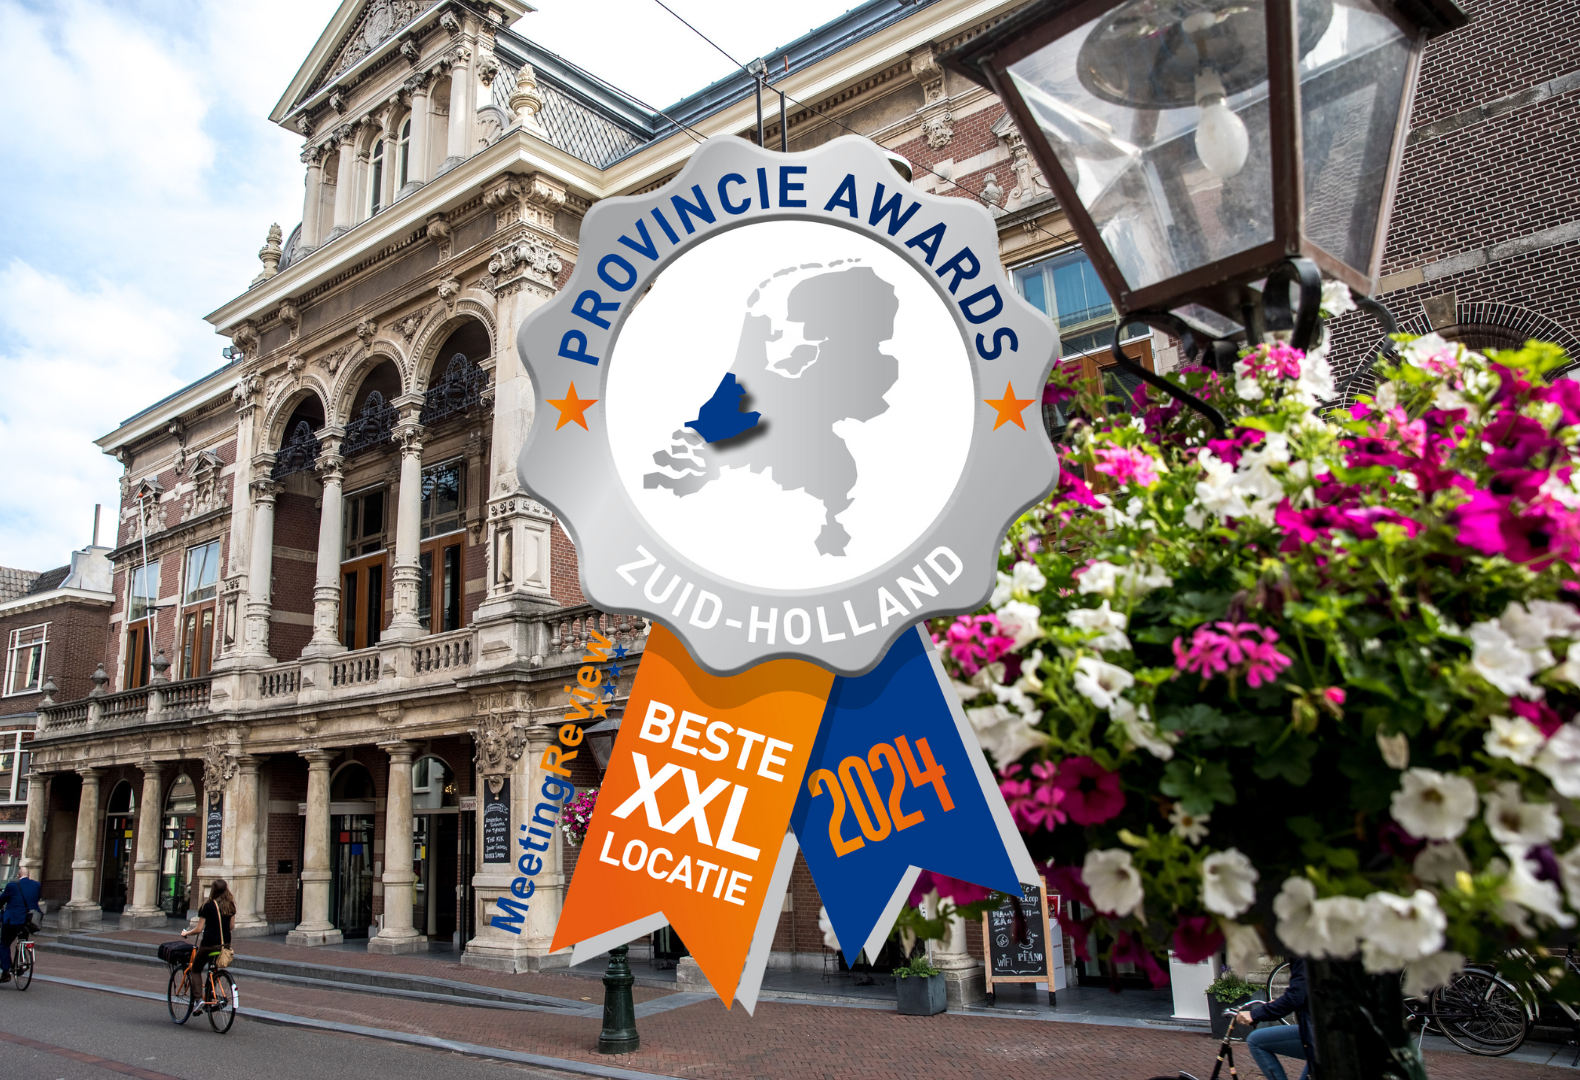 Provincie Award Meeting Review